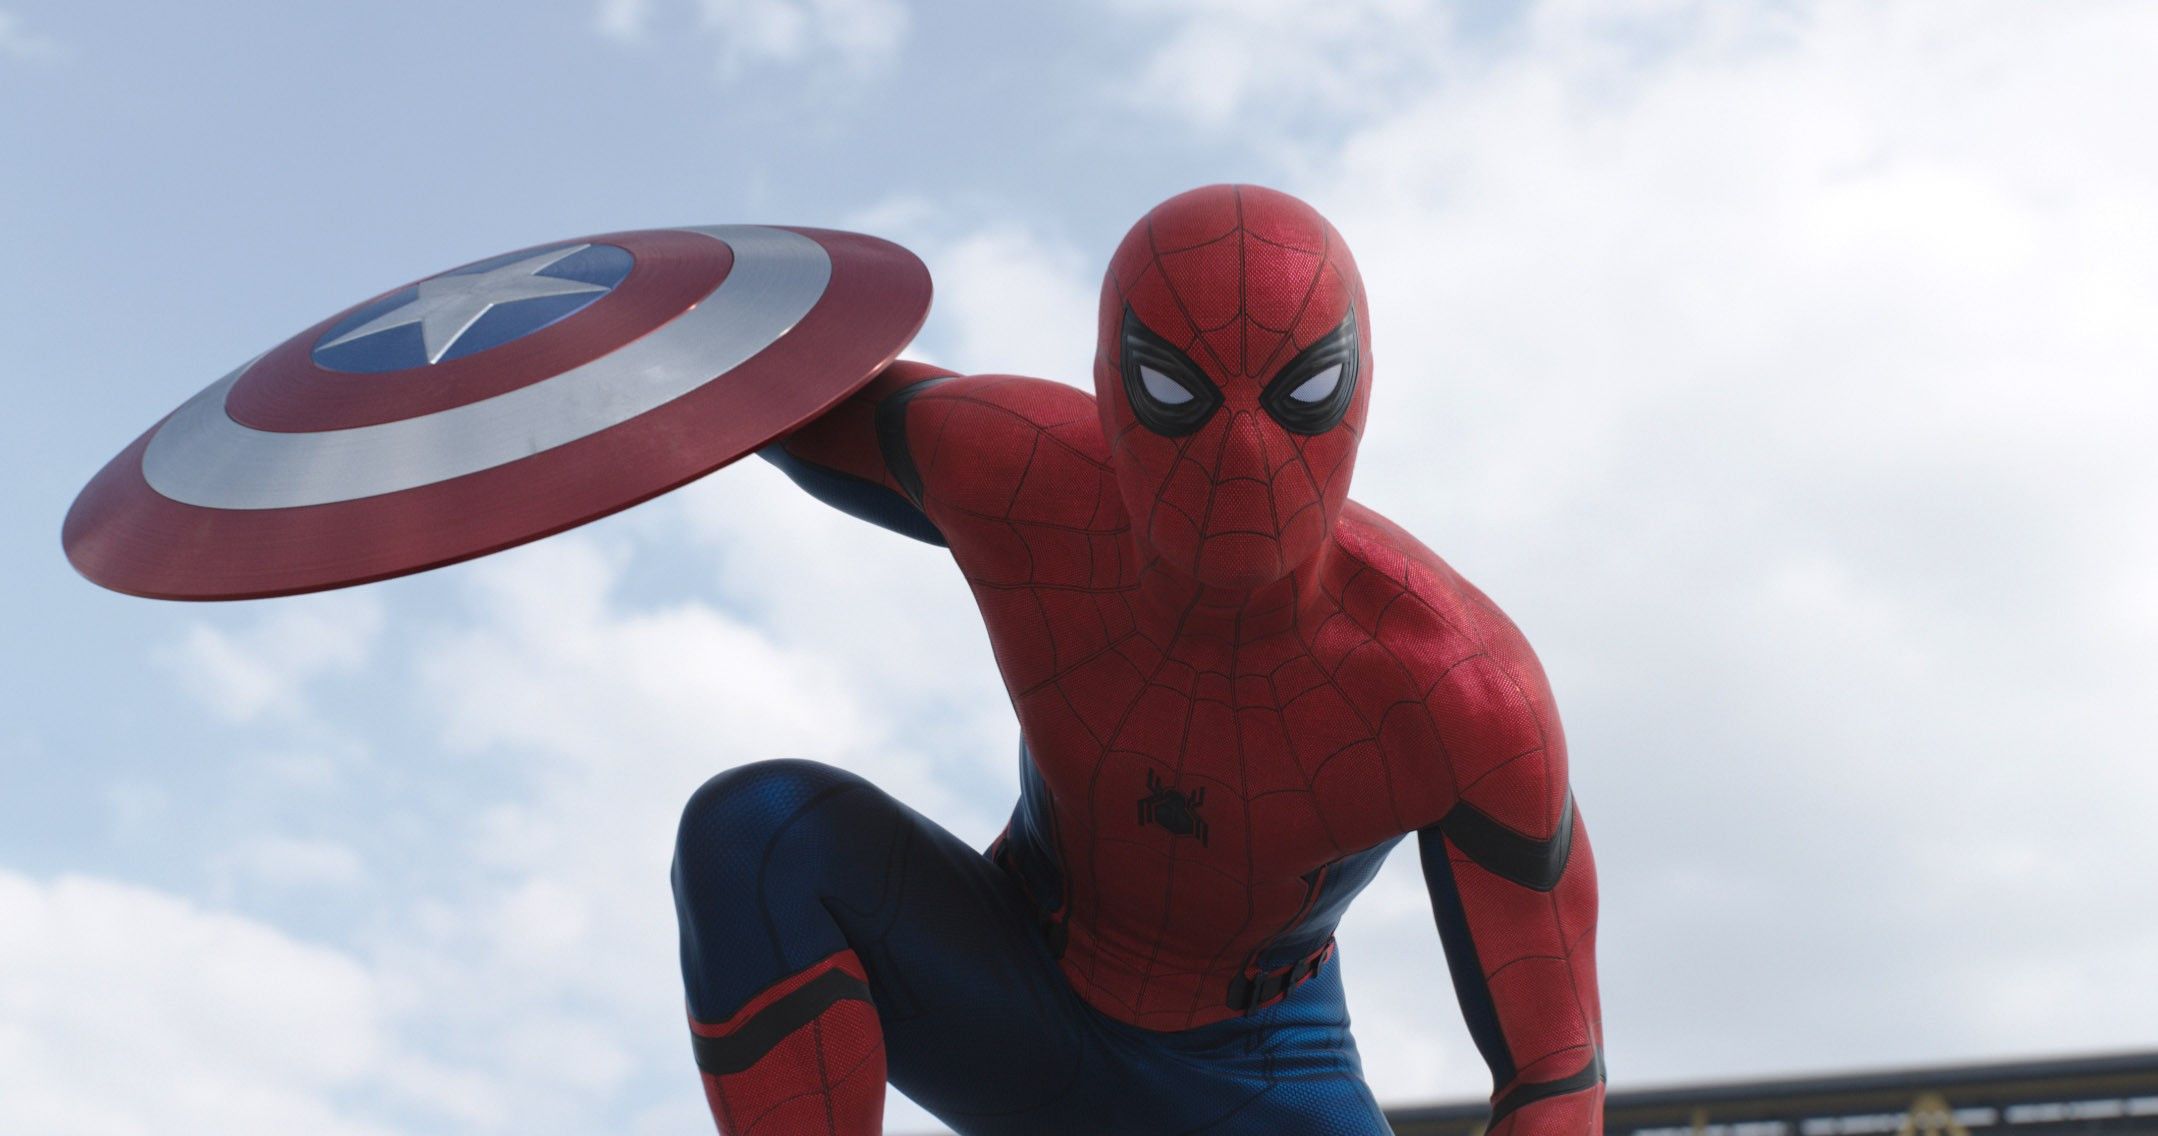 Spider-Man holding Captain America's shield in Captain America: Civil War